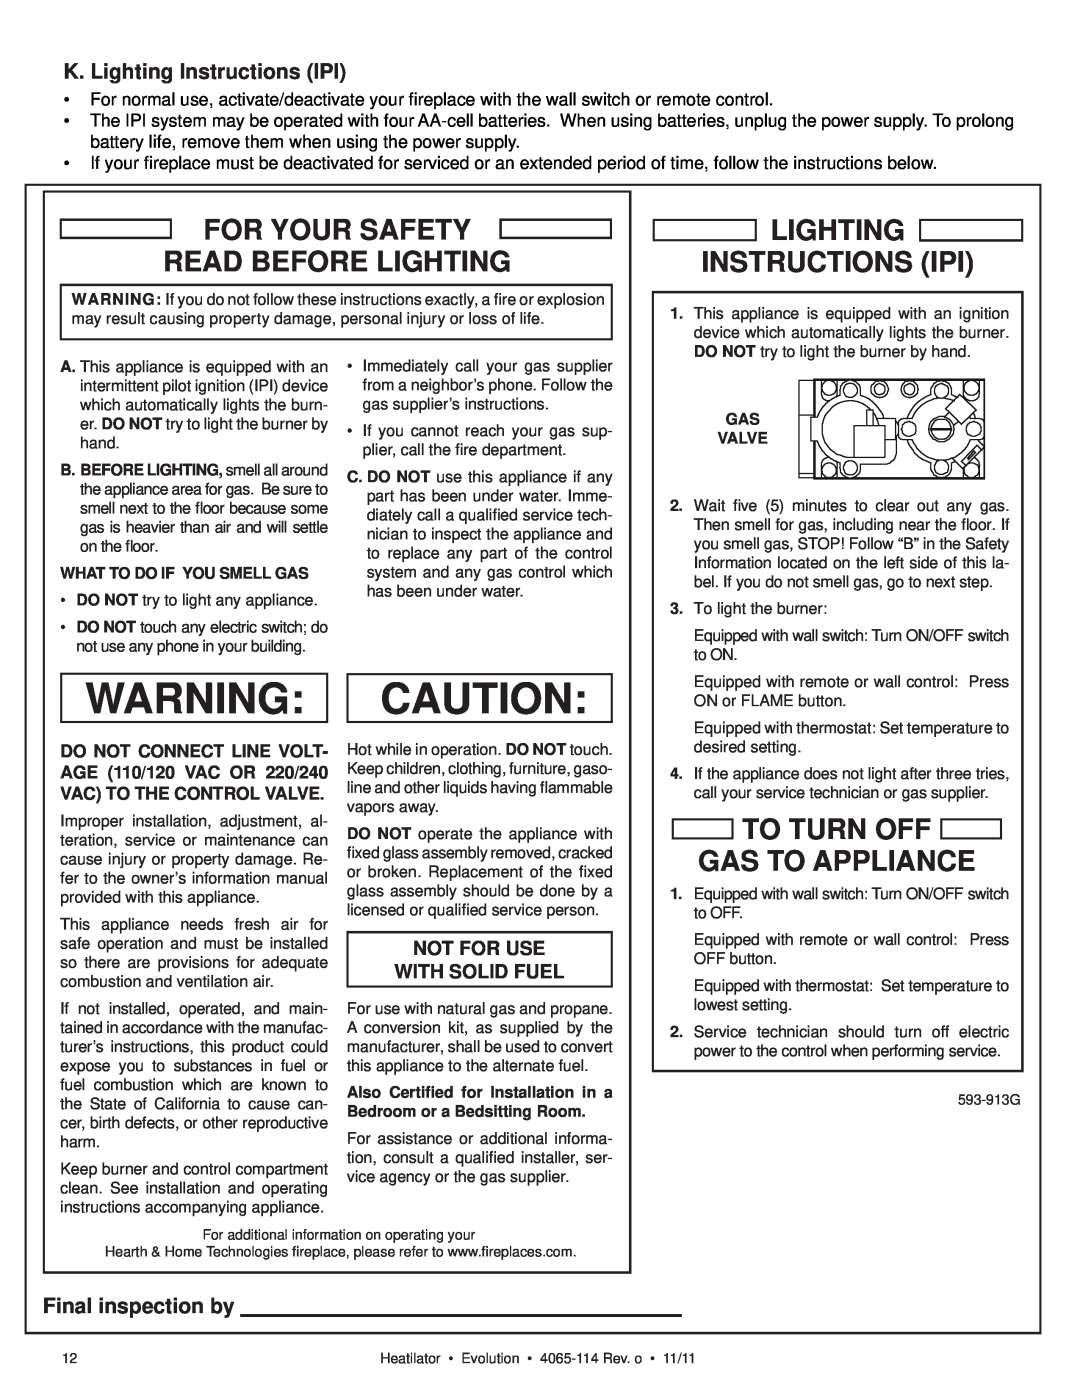 Heatiator NEVO4236I NEVO3630I K. Lighting Instructions IPI, Final inspection by, For Your Safety Read Before Lighting 